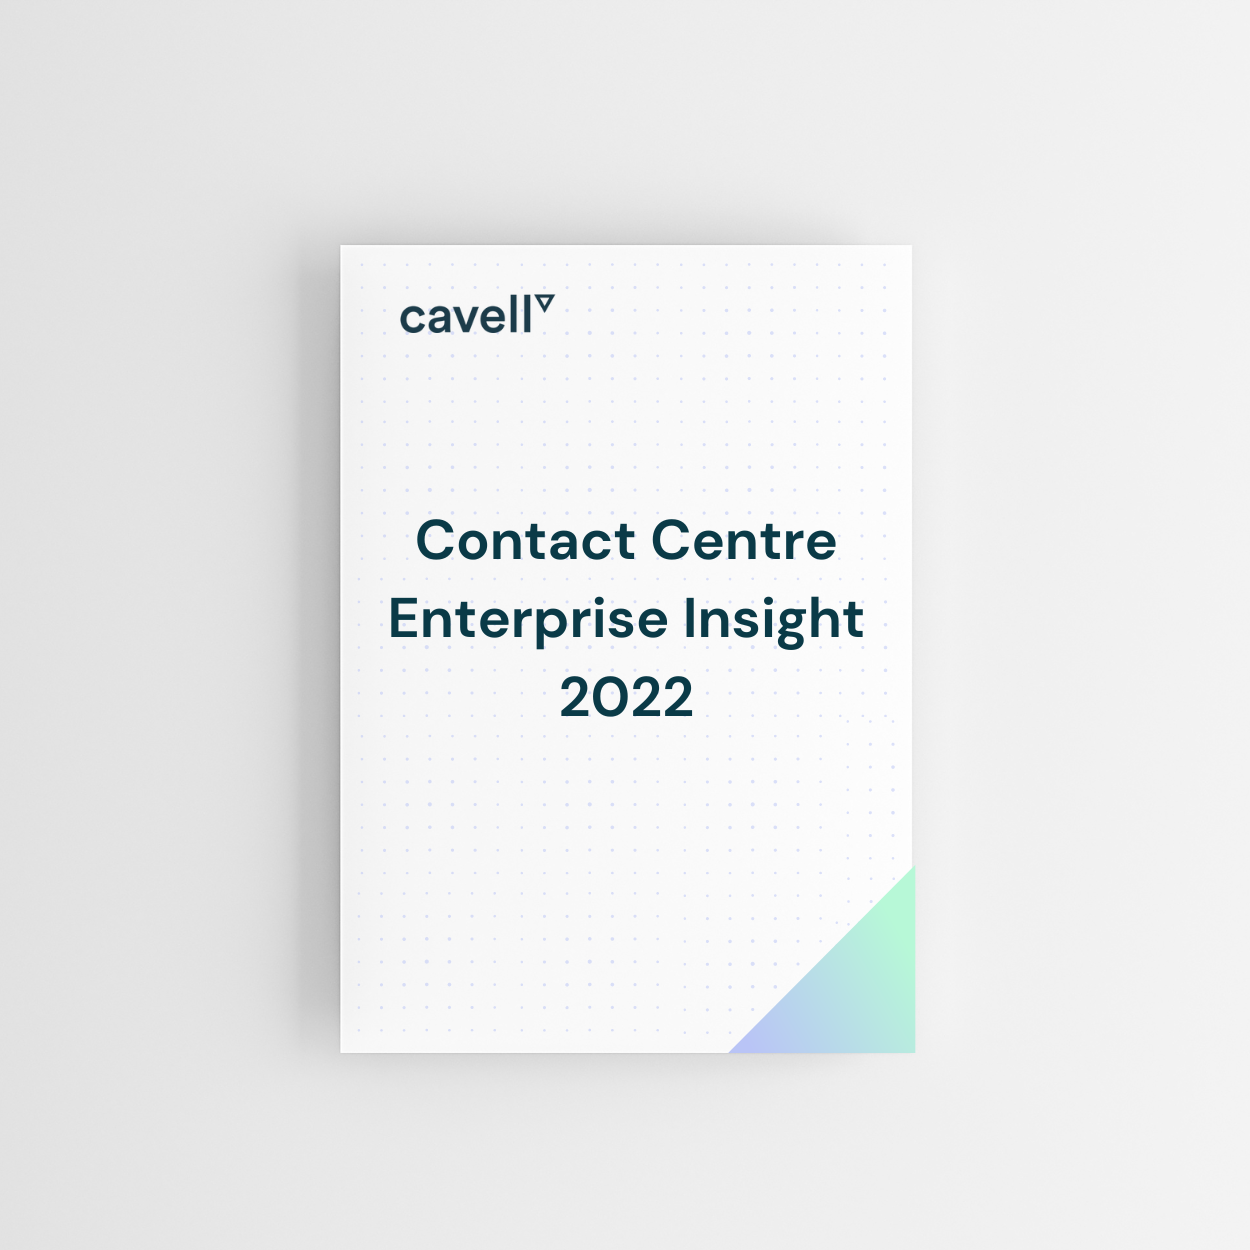 Contact Centre Enterprise Insight 2022